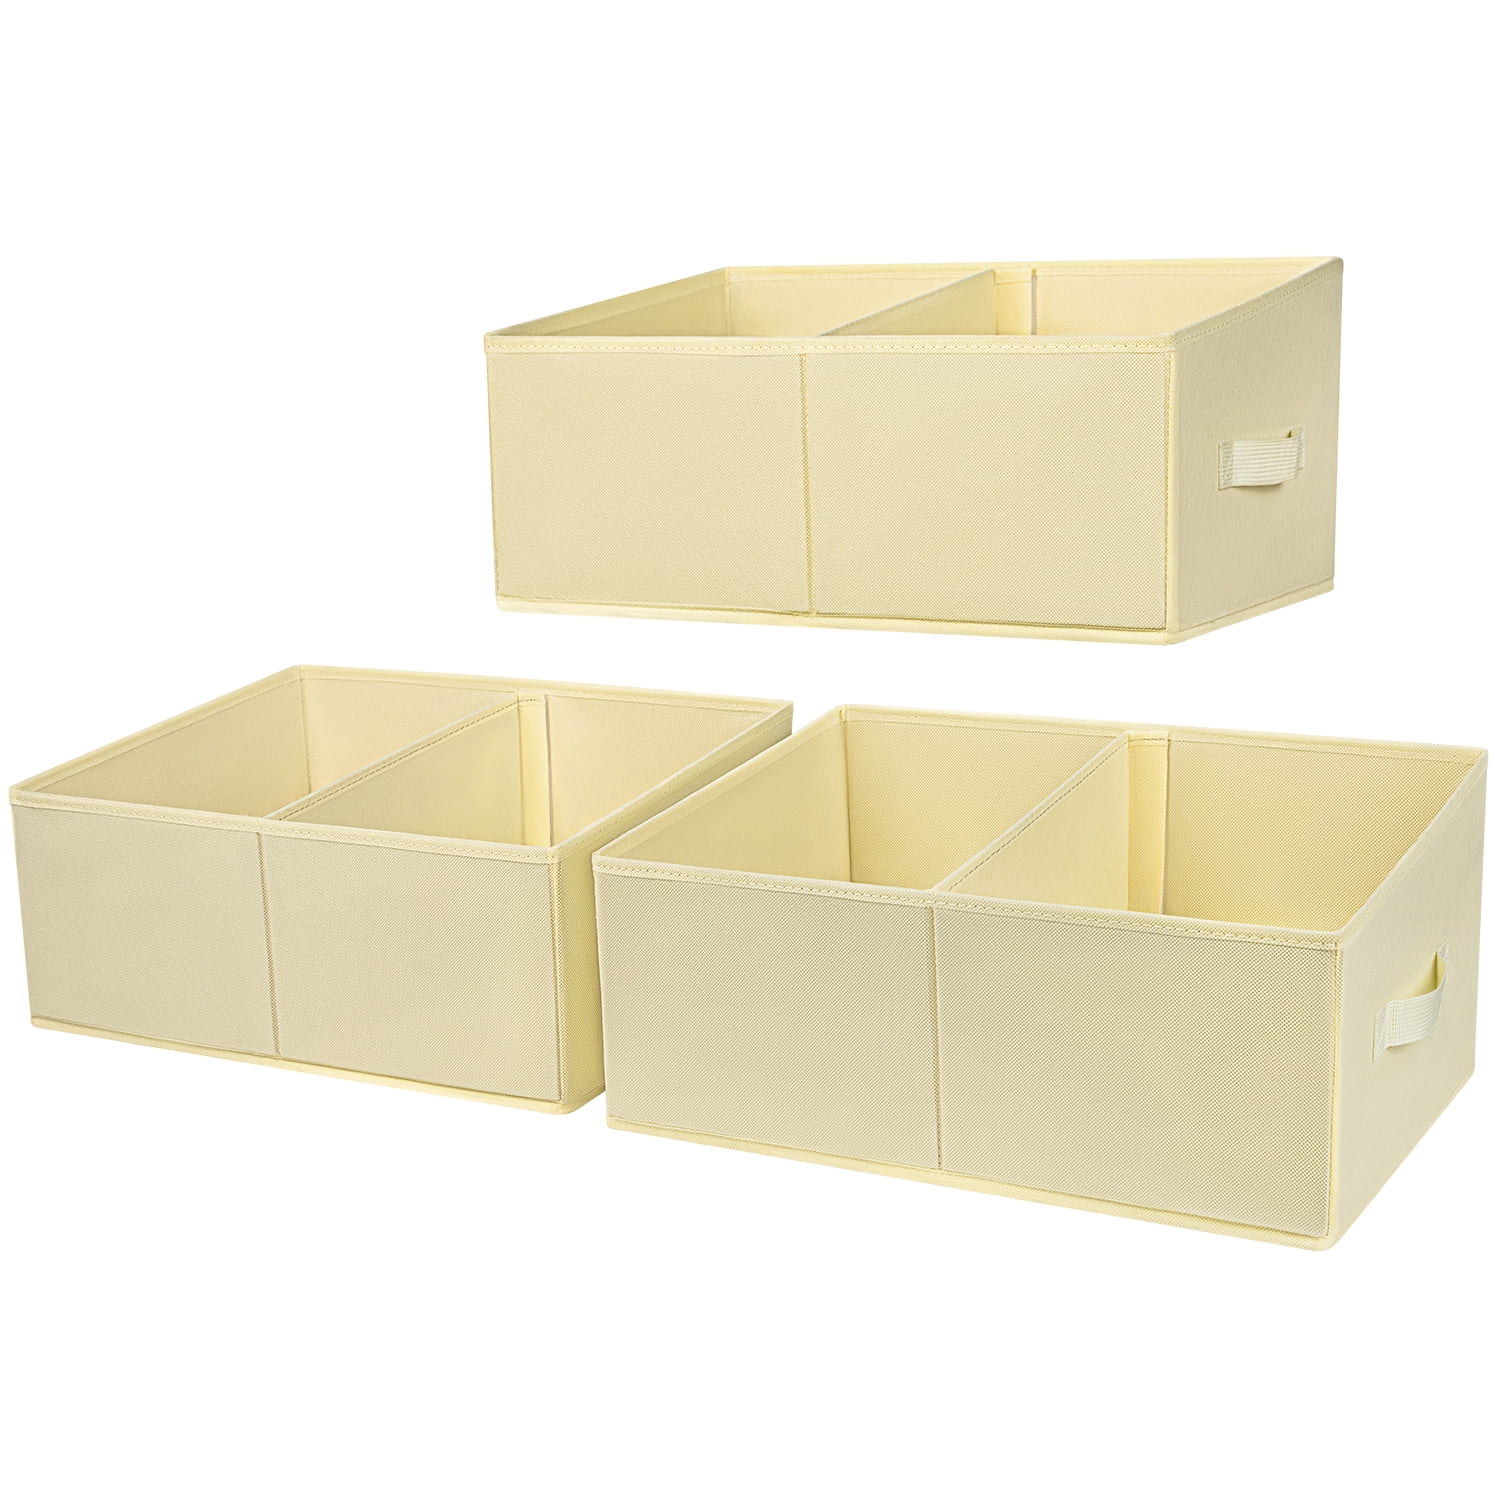 DIMJ Trapezoid Storage Bins, Closet Baskets with Handles, Fabric